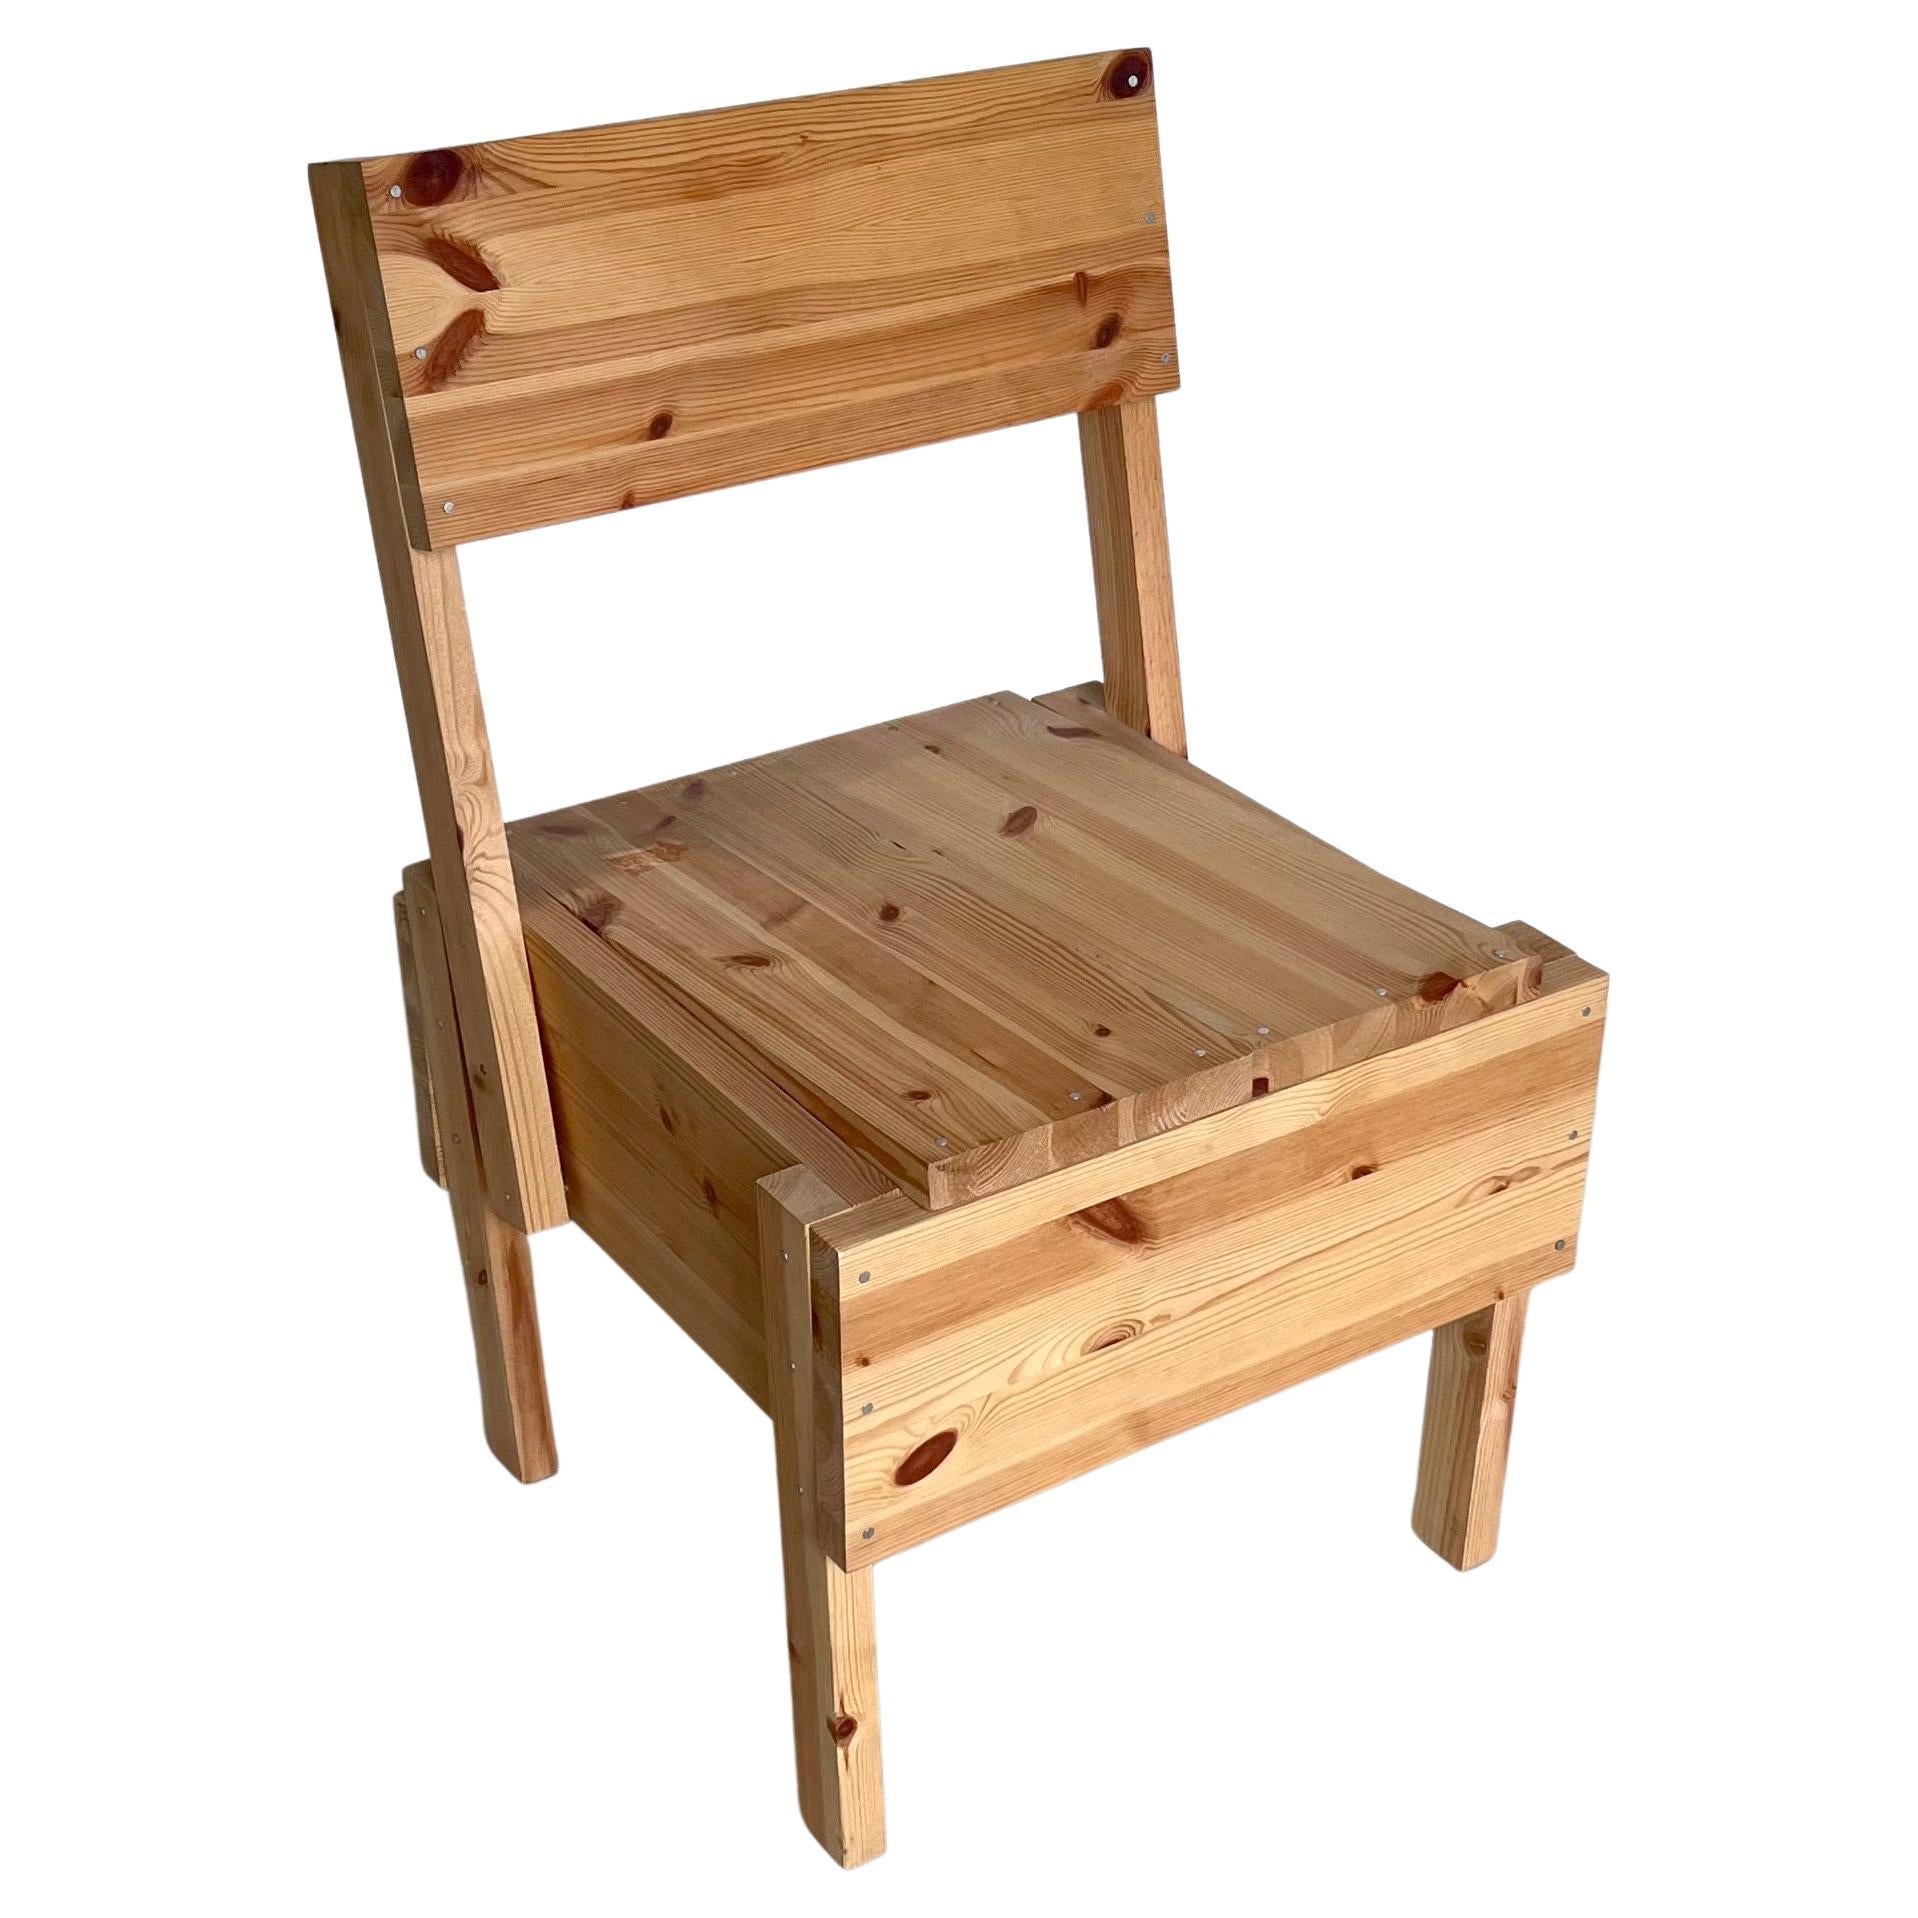 Enzo Mari "Sedia 1", "Chair 1" for Artek Finland, 2002, Wood, Collectible Design For Sale